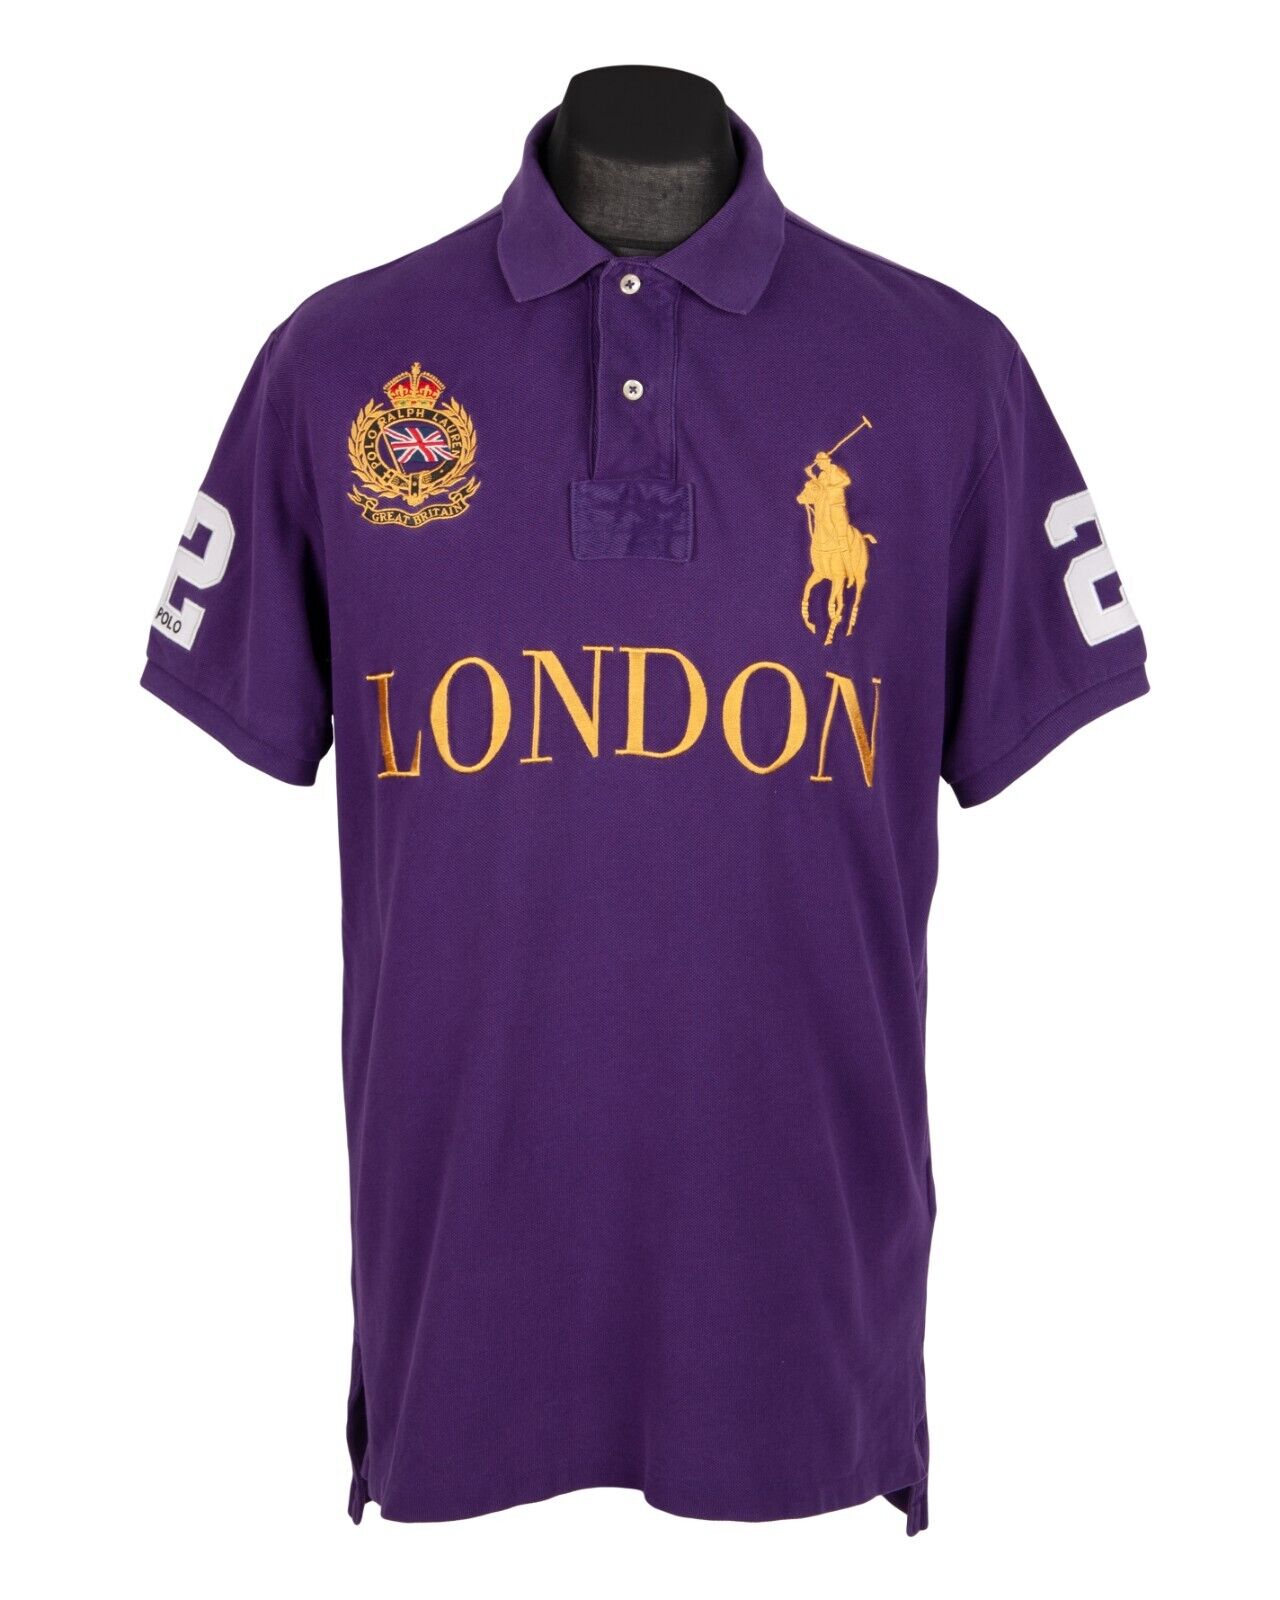 POLO RALPH LAUREN London Polo Shirt Purple Cotton Mens Big Pony